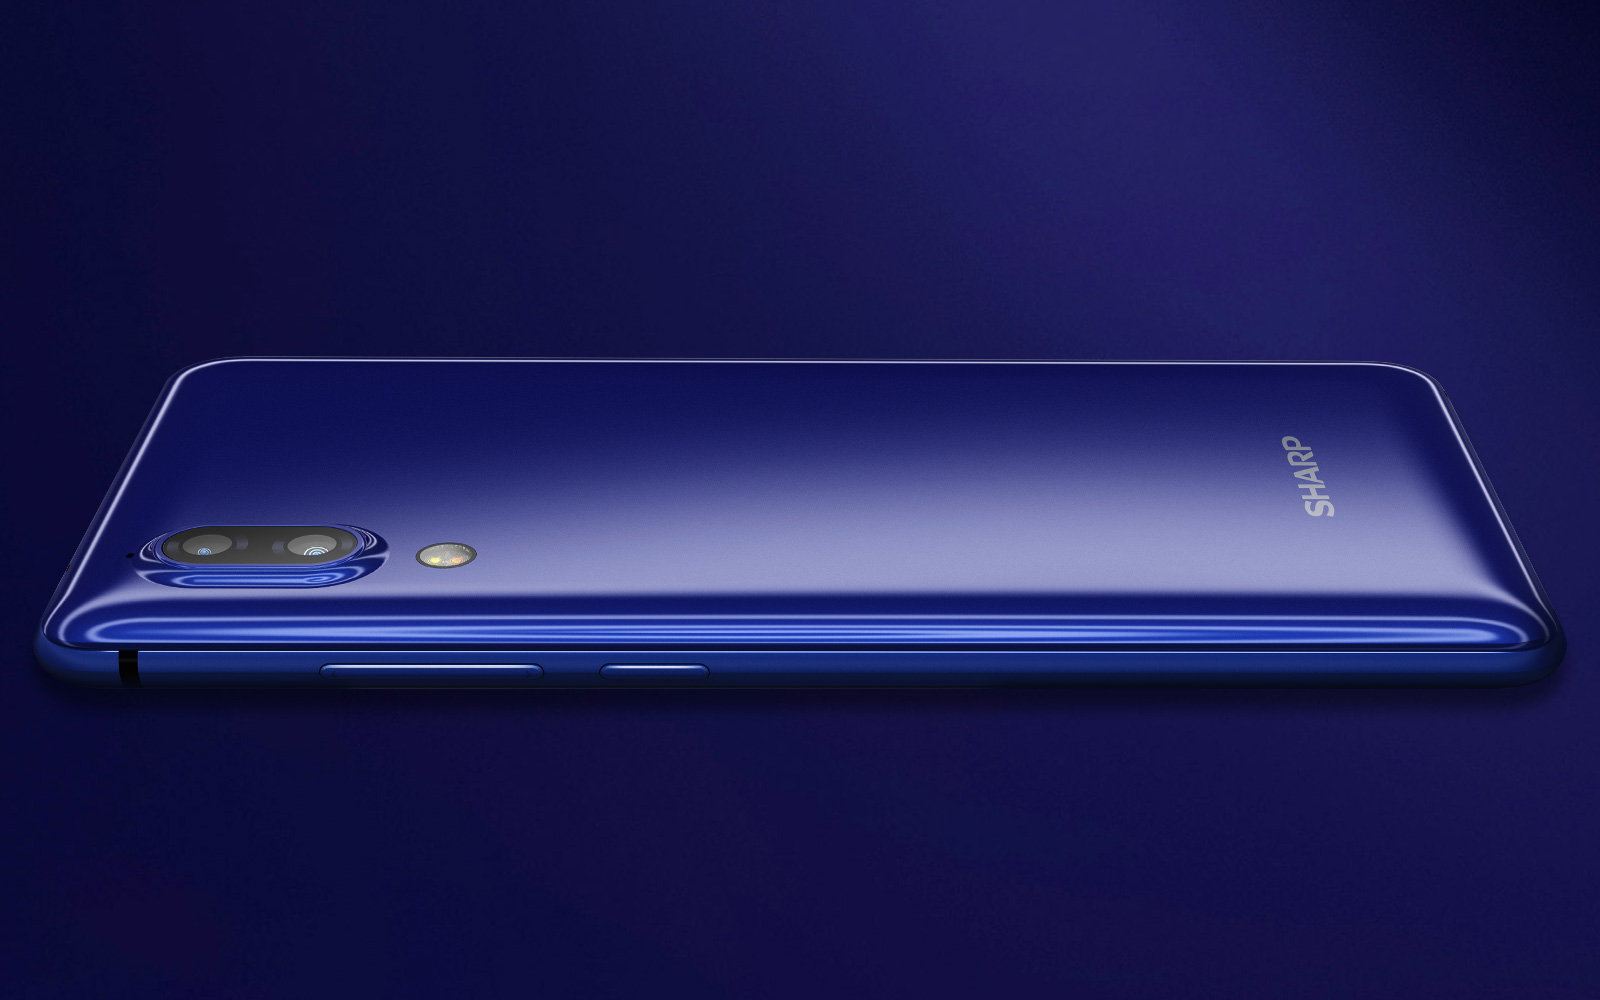 sharp-announces-newest-bezel-less-smartphone-the-aquos-s2